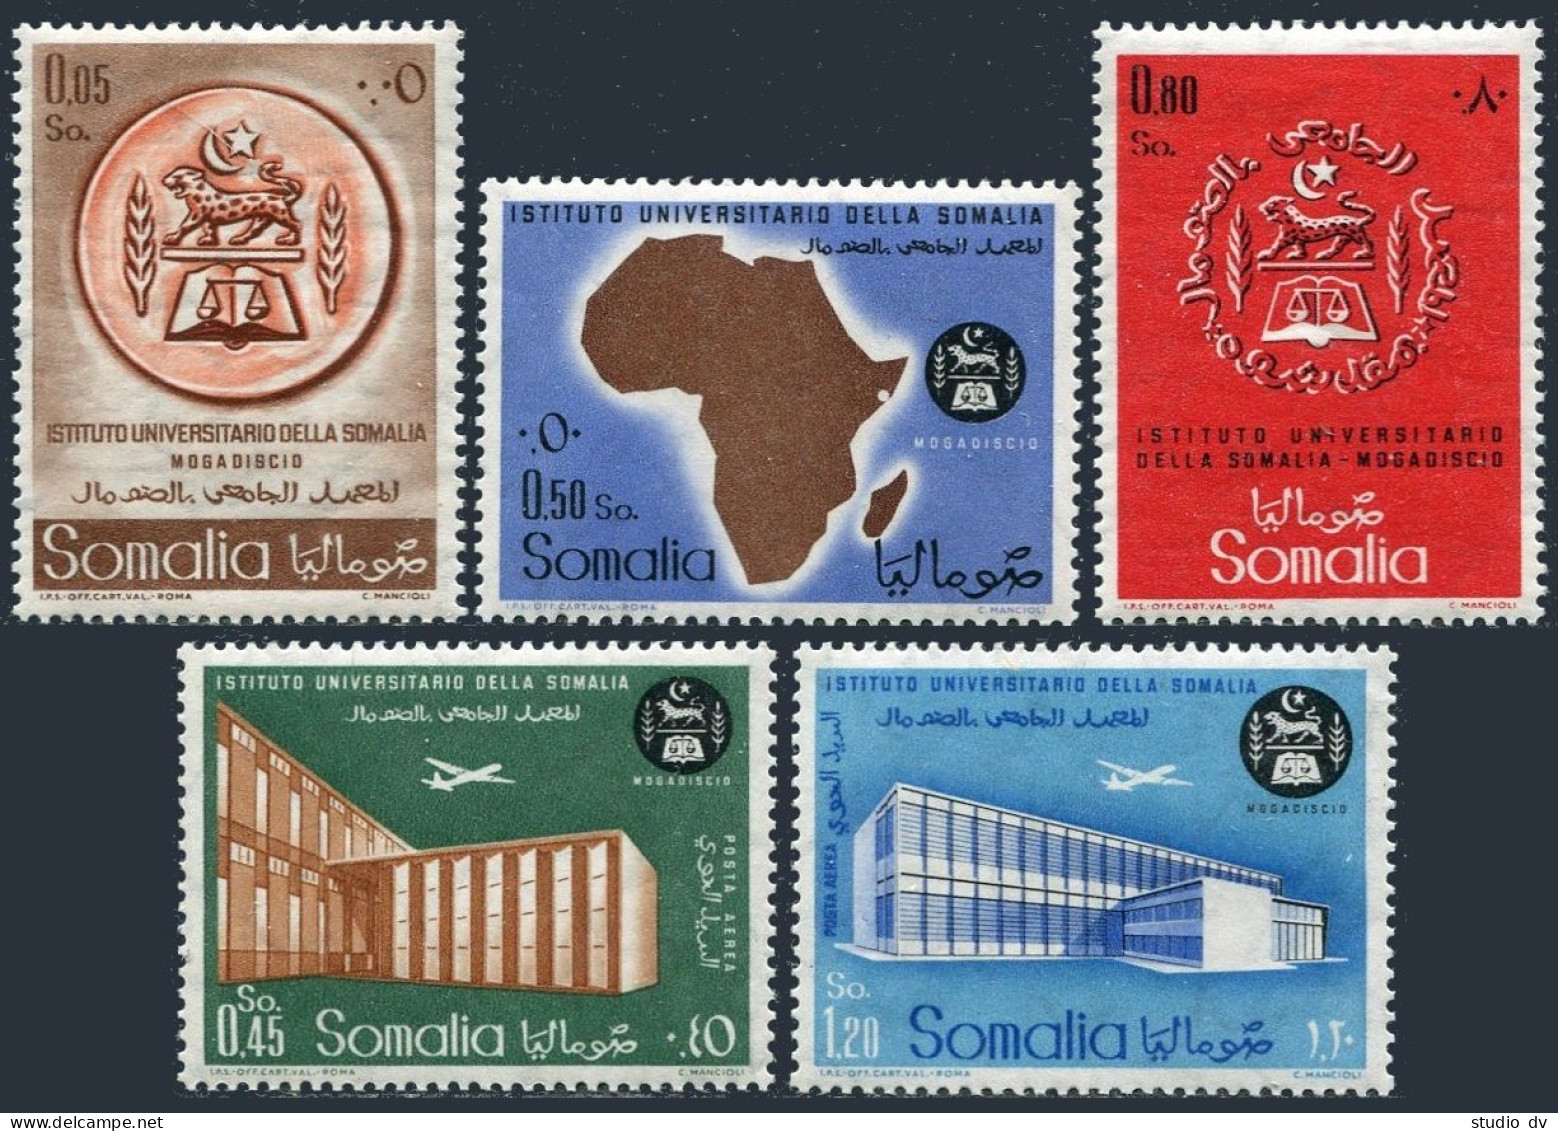 Somalia 236-238,C65-C66, MNH. Mi 367-371. University Institute, 1960. Arms, Map. - Somalia (1960-...)